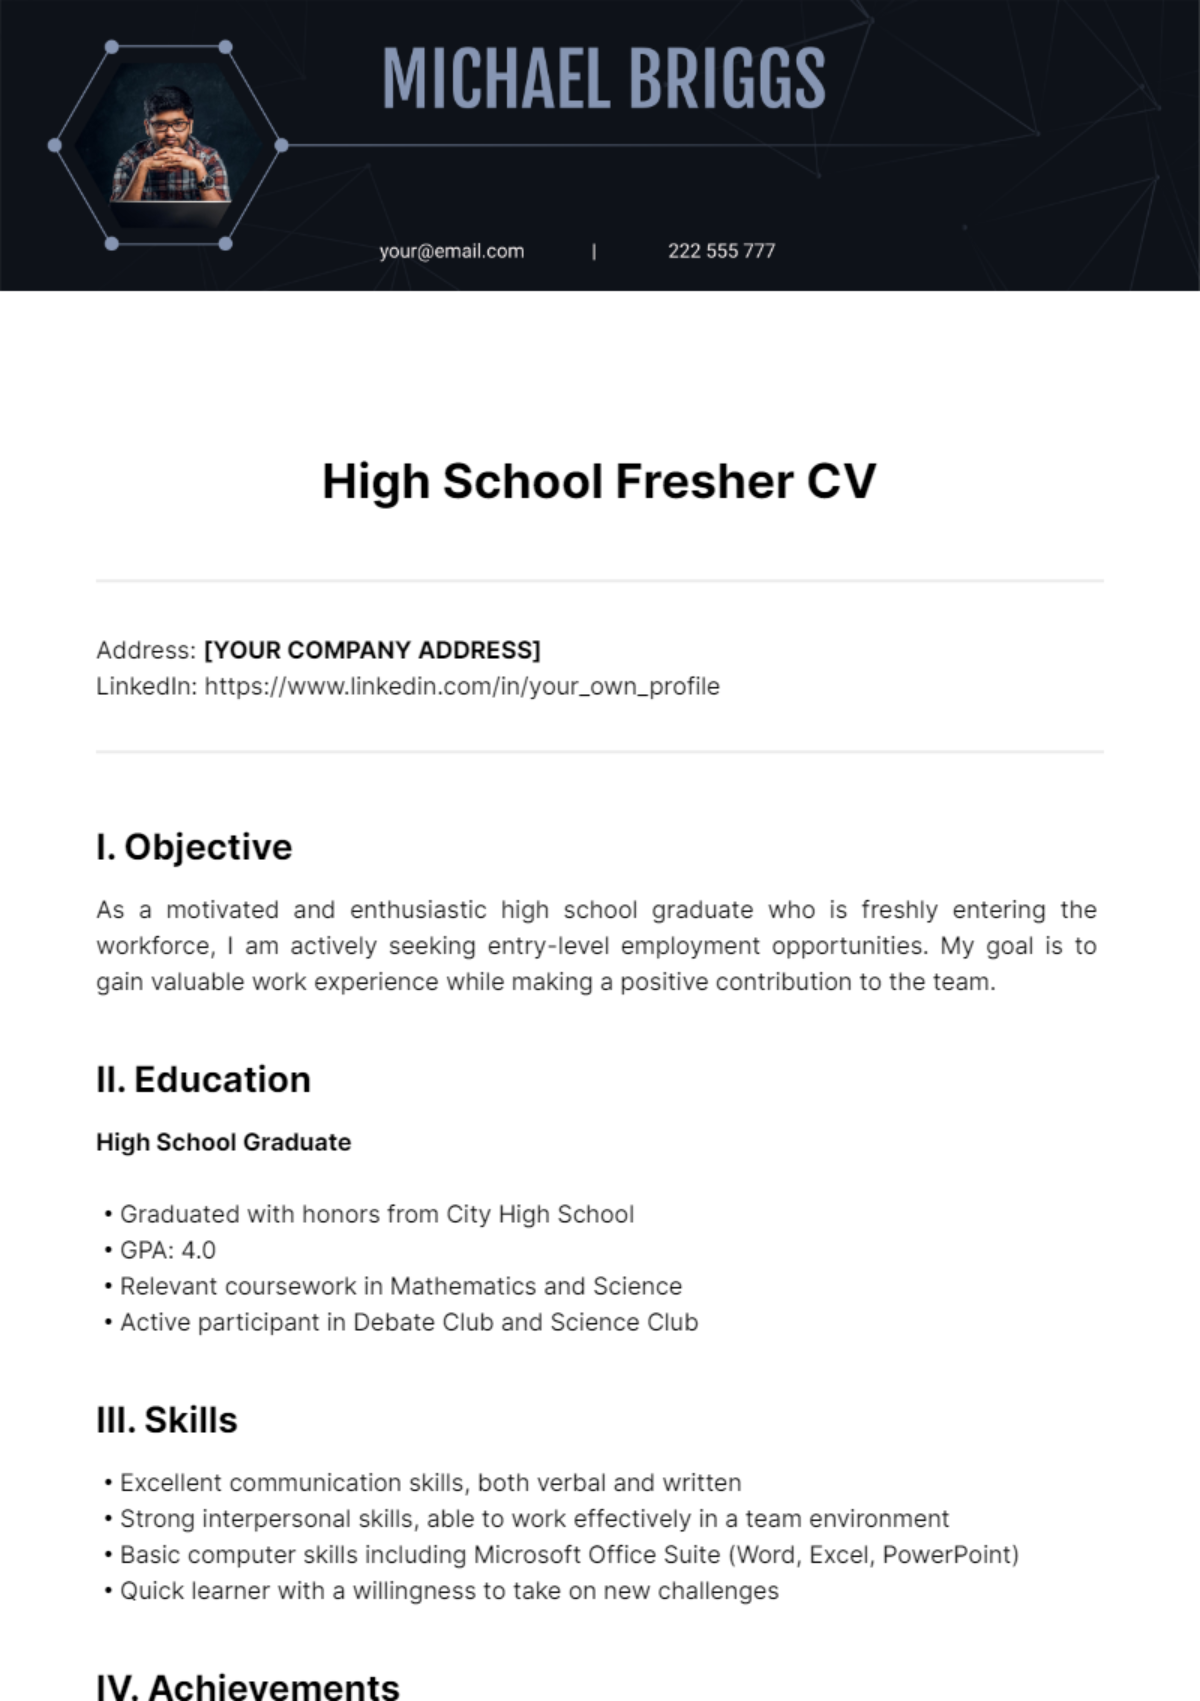 High School Fresher CV Template